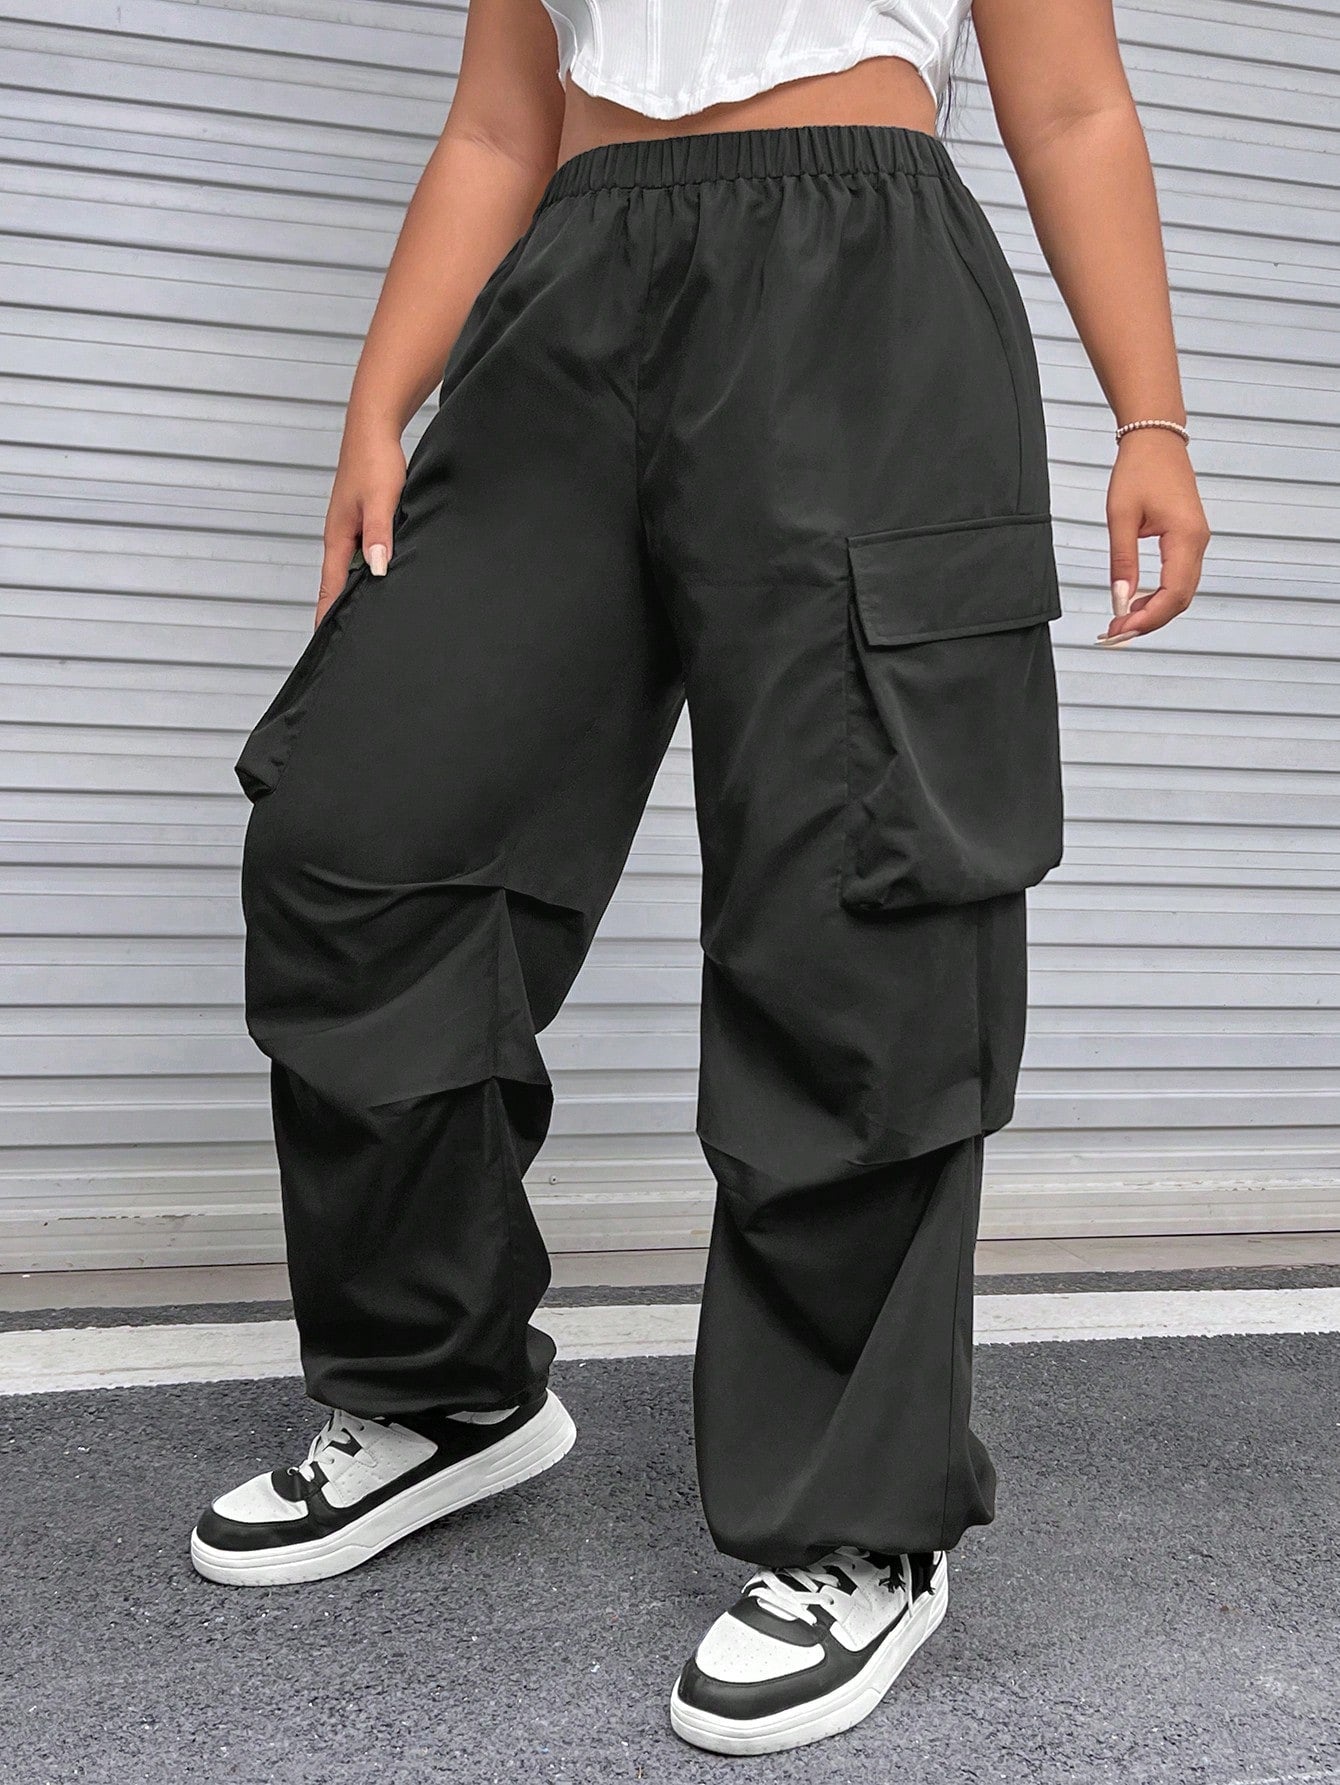 Pants for Women Flap Pocket Side Cargo Pants